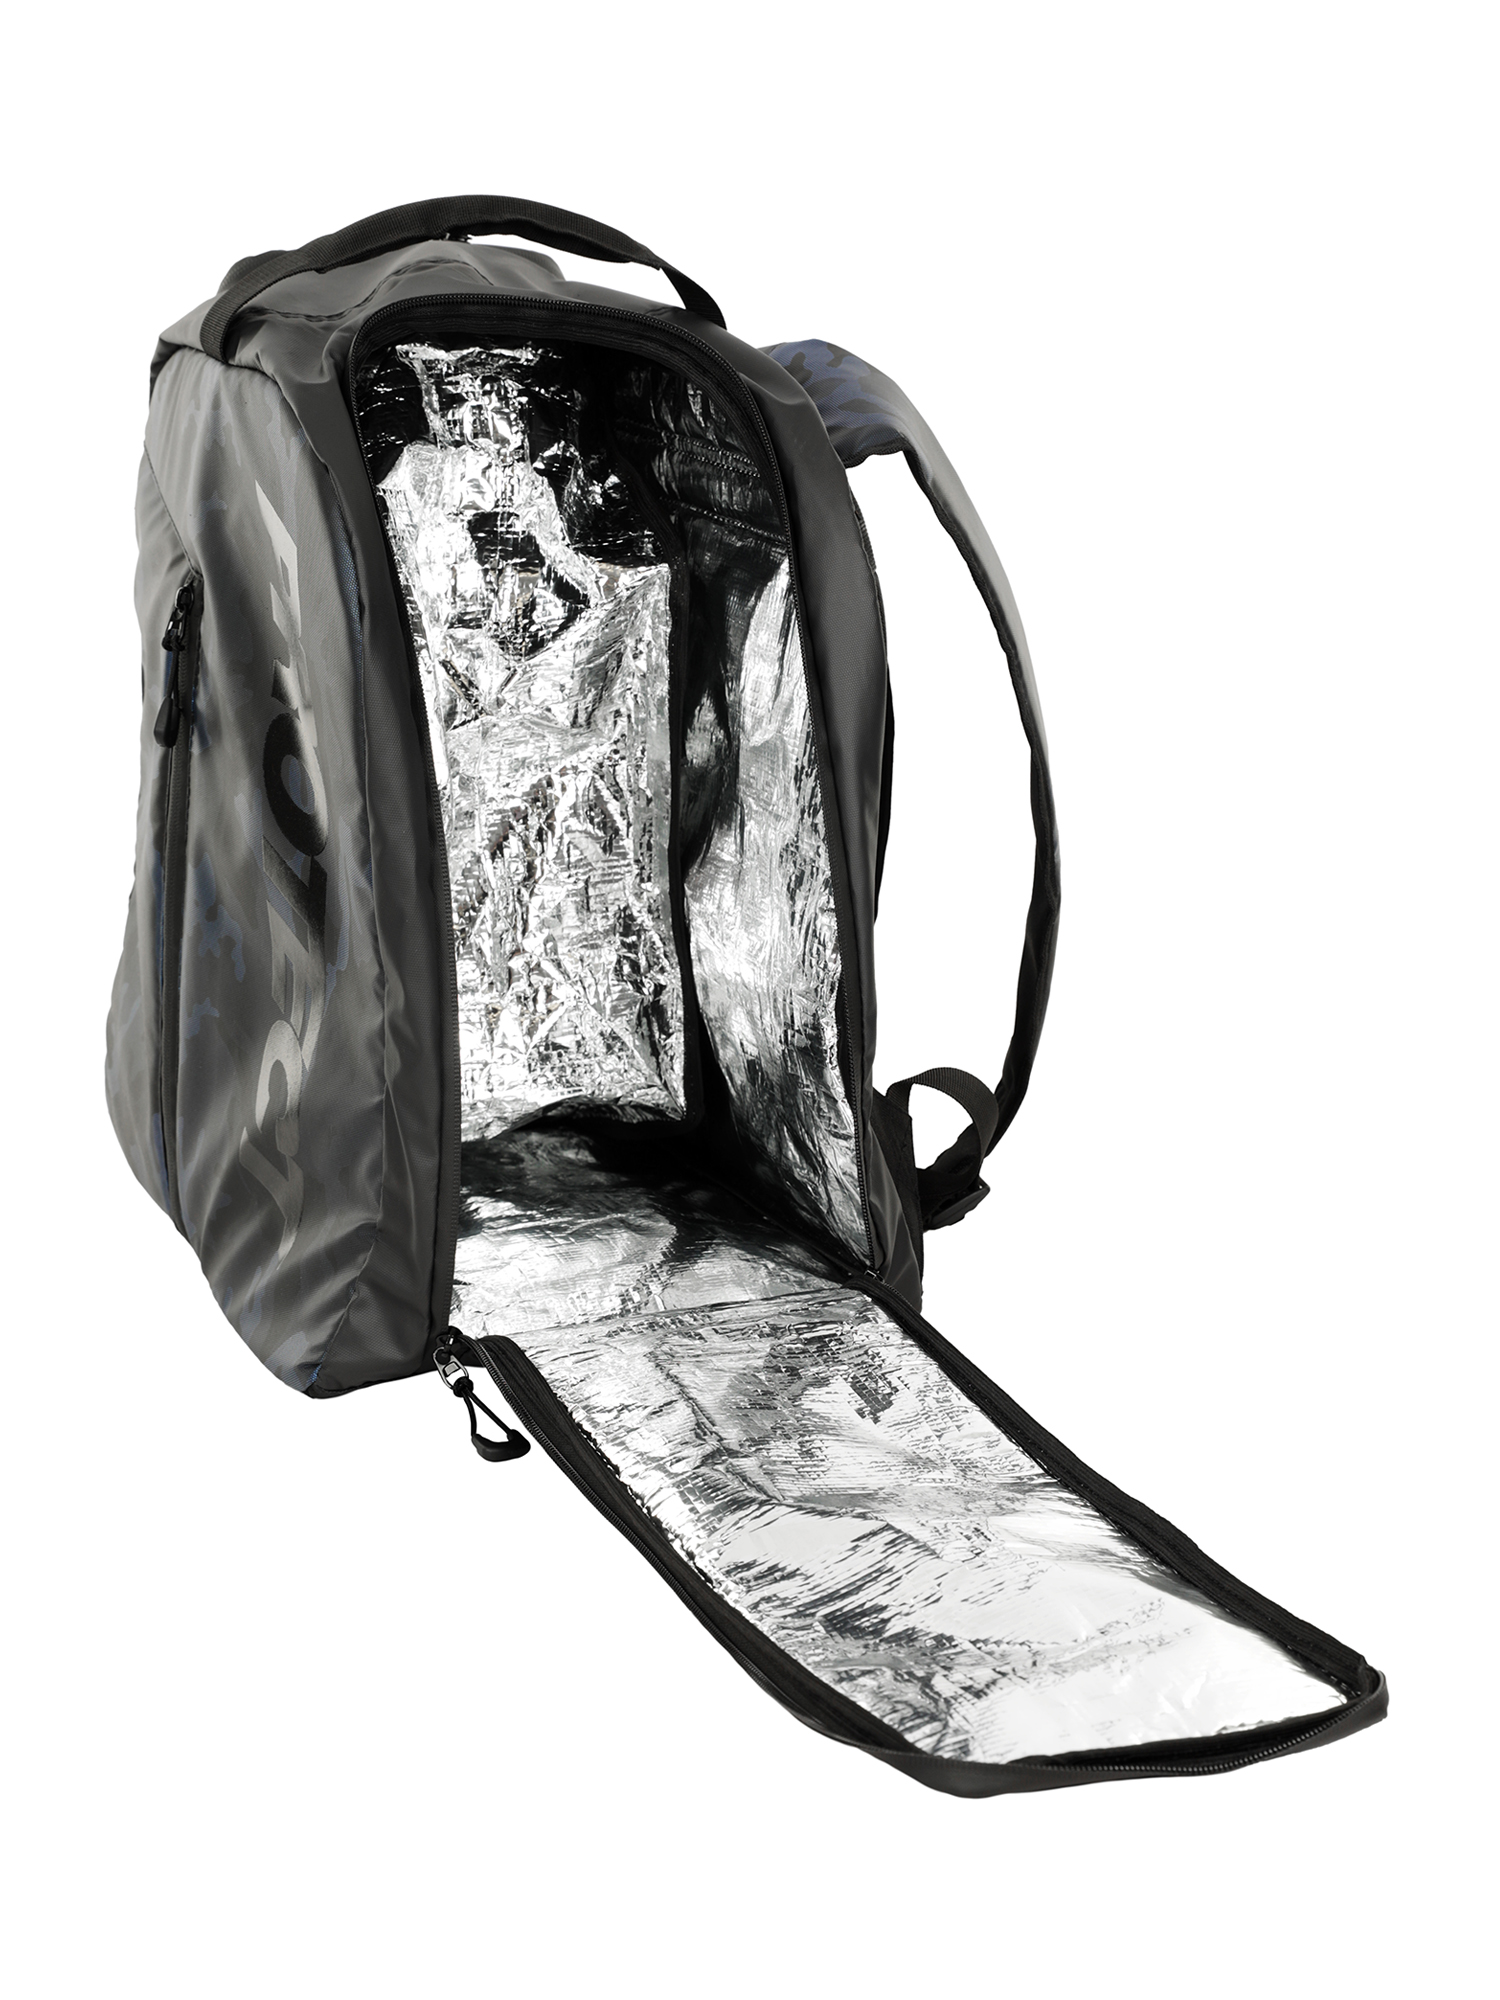 Сумка-рюкзак для ботинок PROTECT горн. лыжи, сноуборд. + шлем + перчатки, цвет черны, -р 36х40х26 см